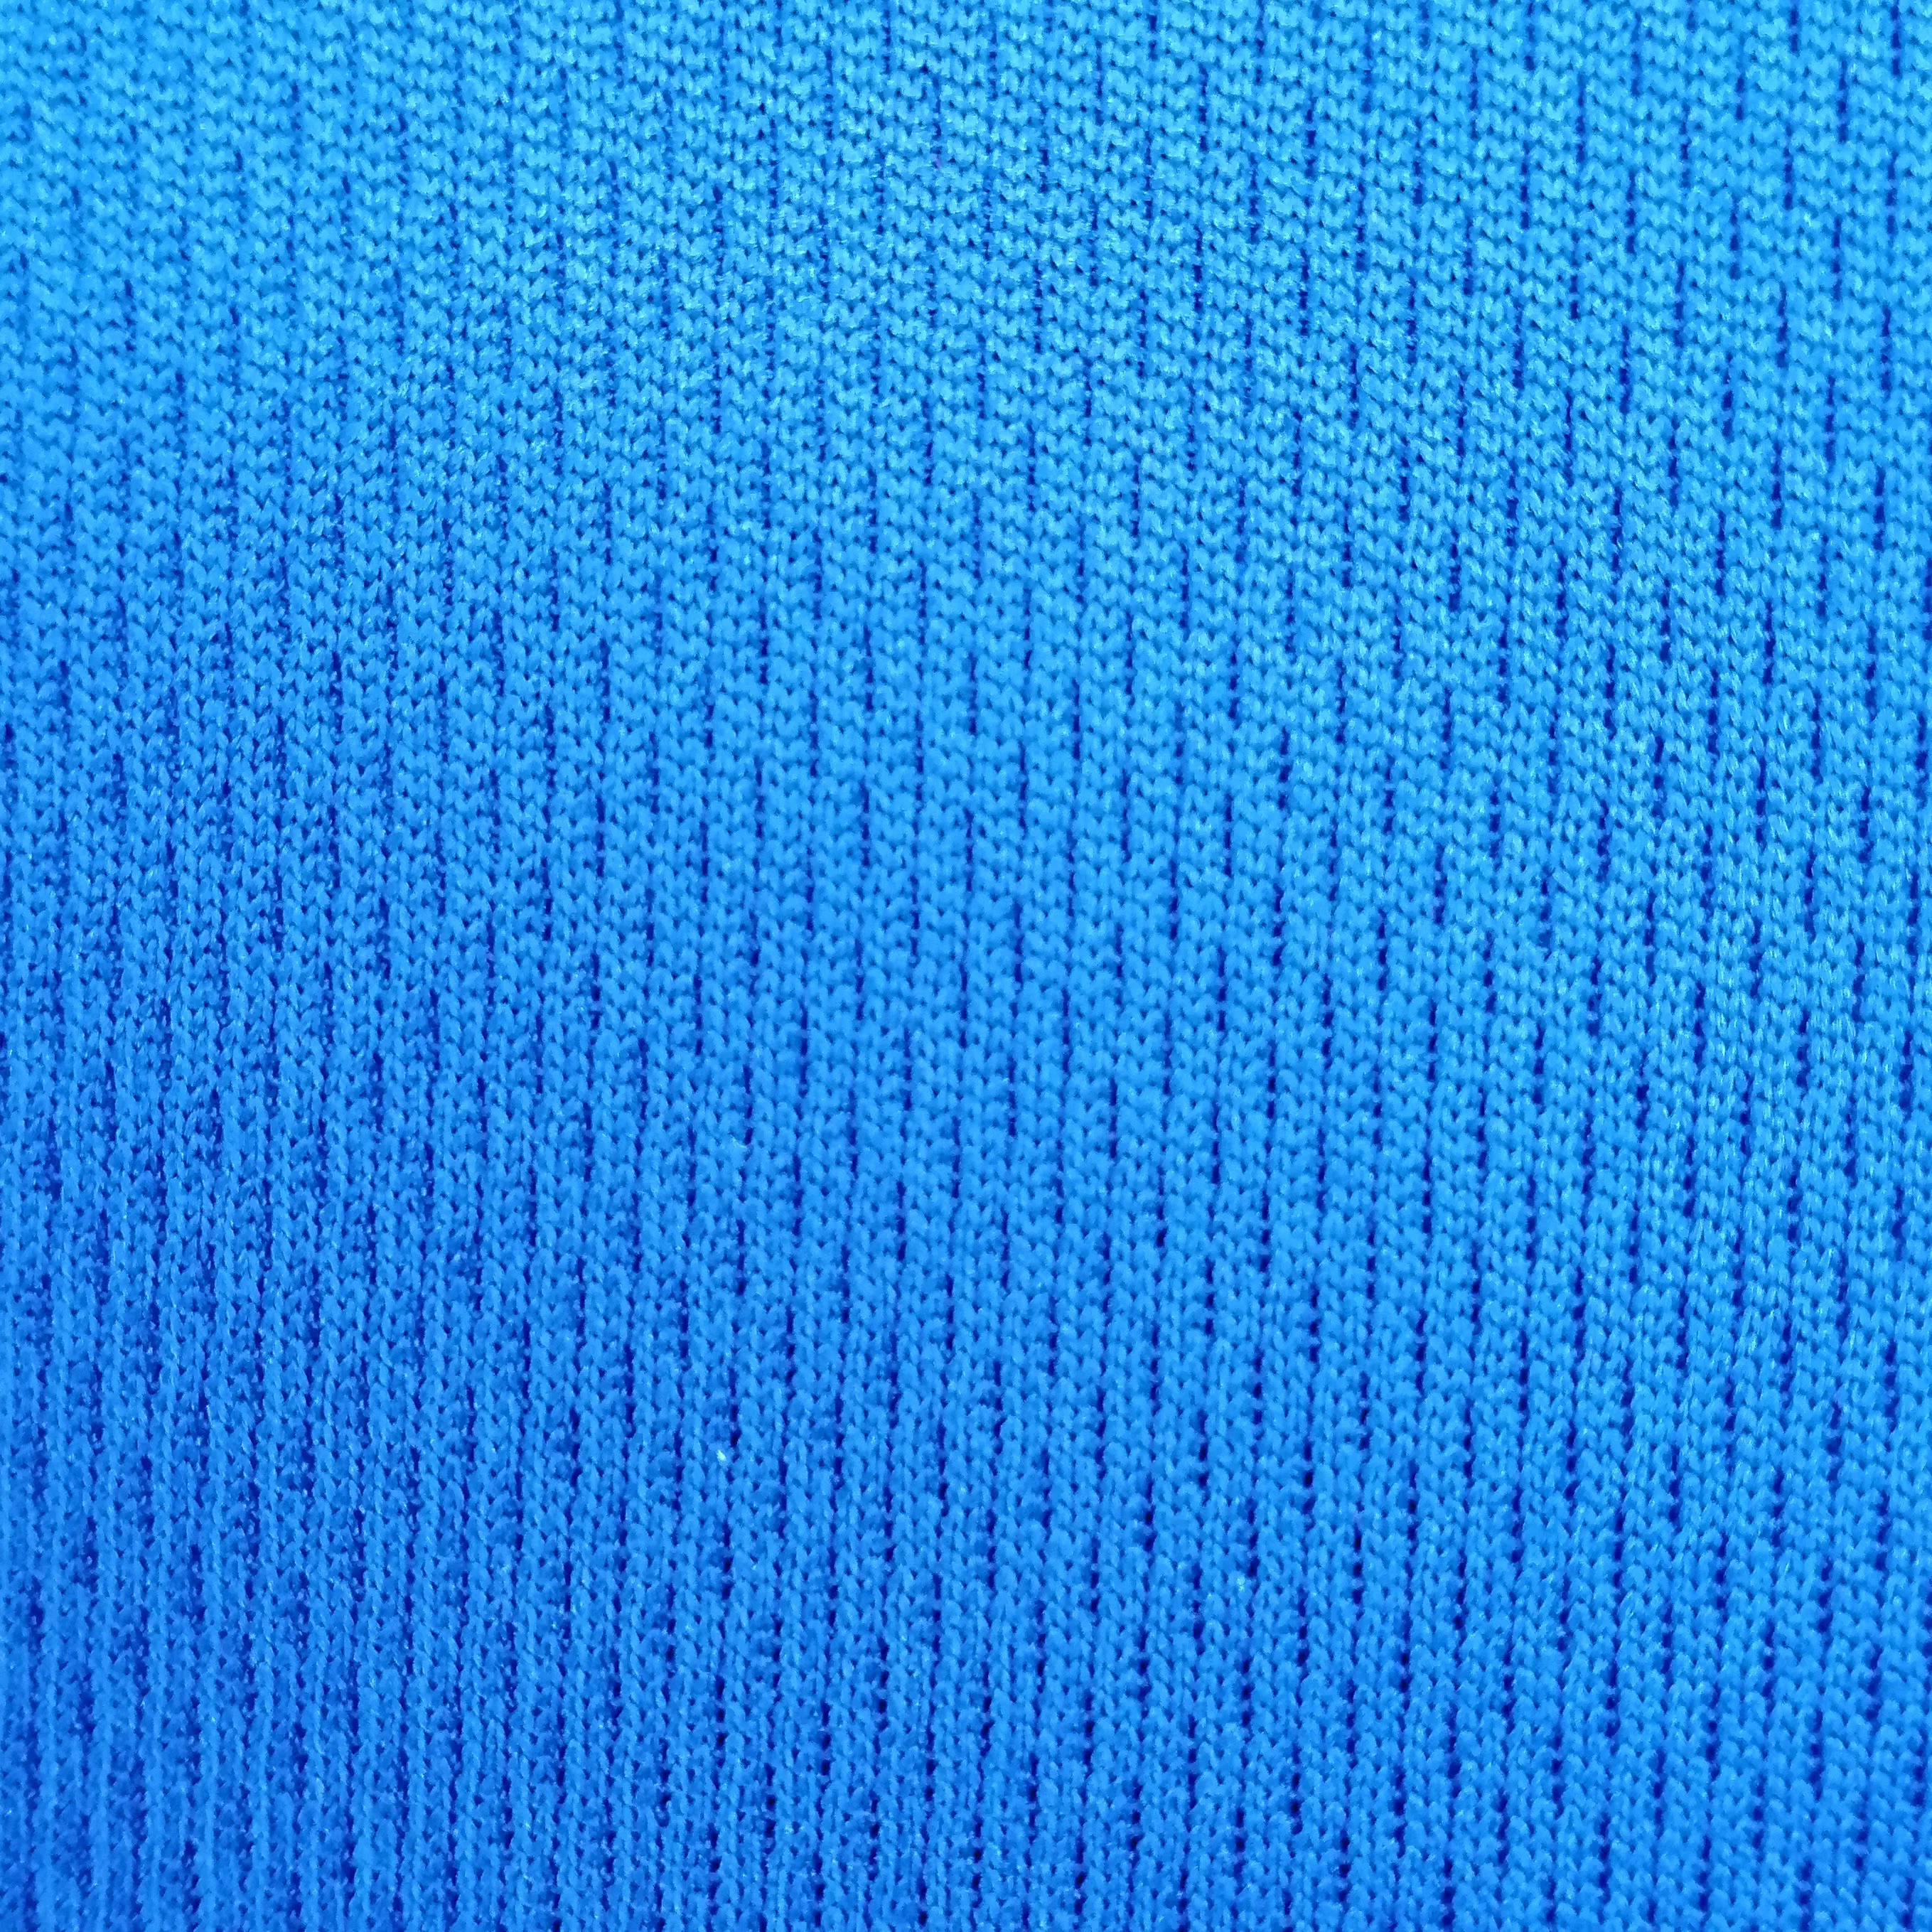 MEIJIALI Textile Hot Sale  polyester bird eye mesh fabric 180GSM birds eye knitted fabric t shirt fabric